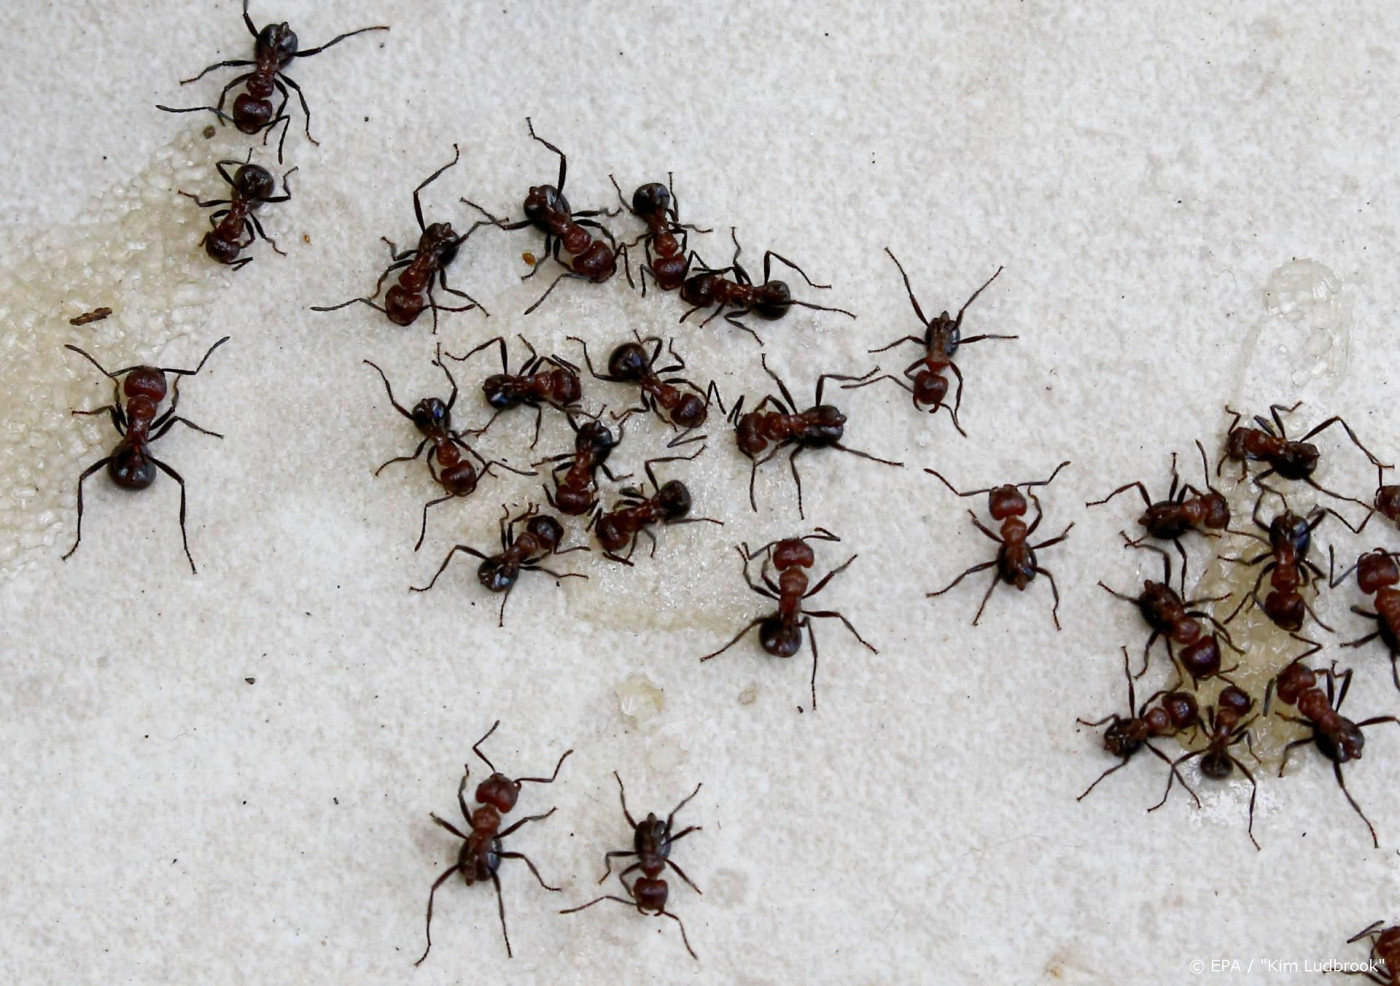 Nederlandse bedrijven bouwen mierenzuur-aggregaat